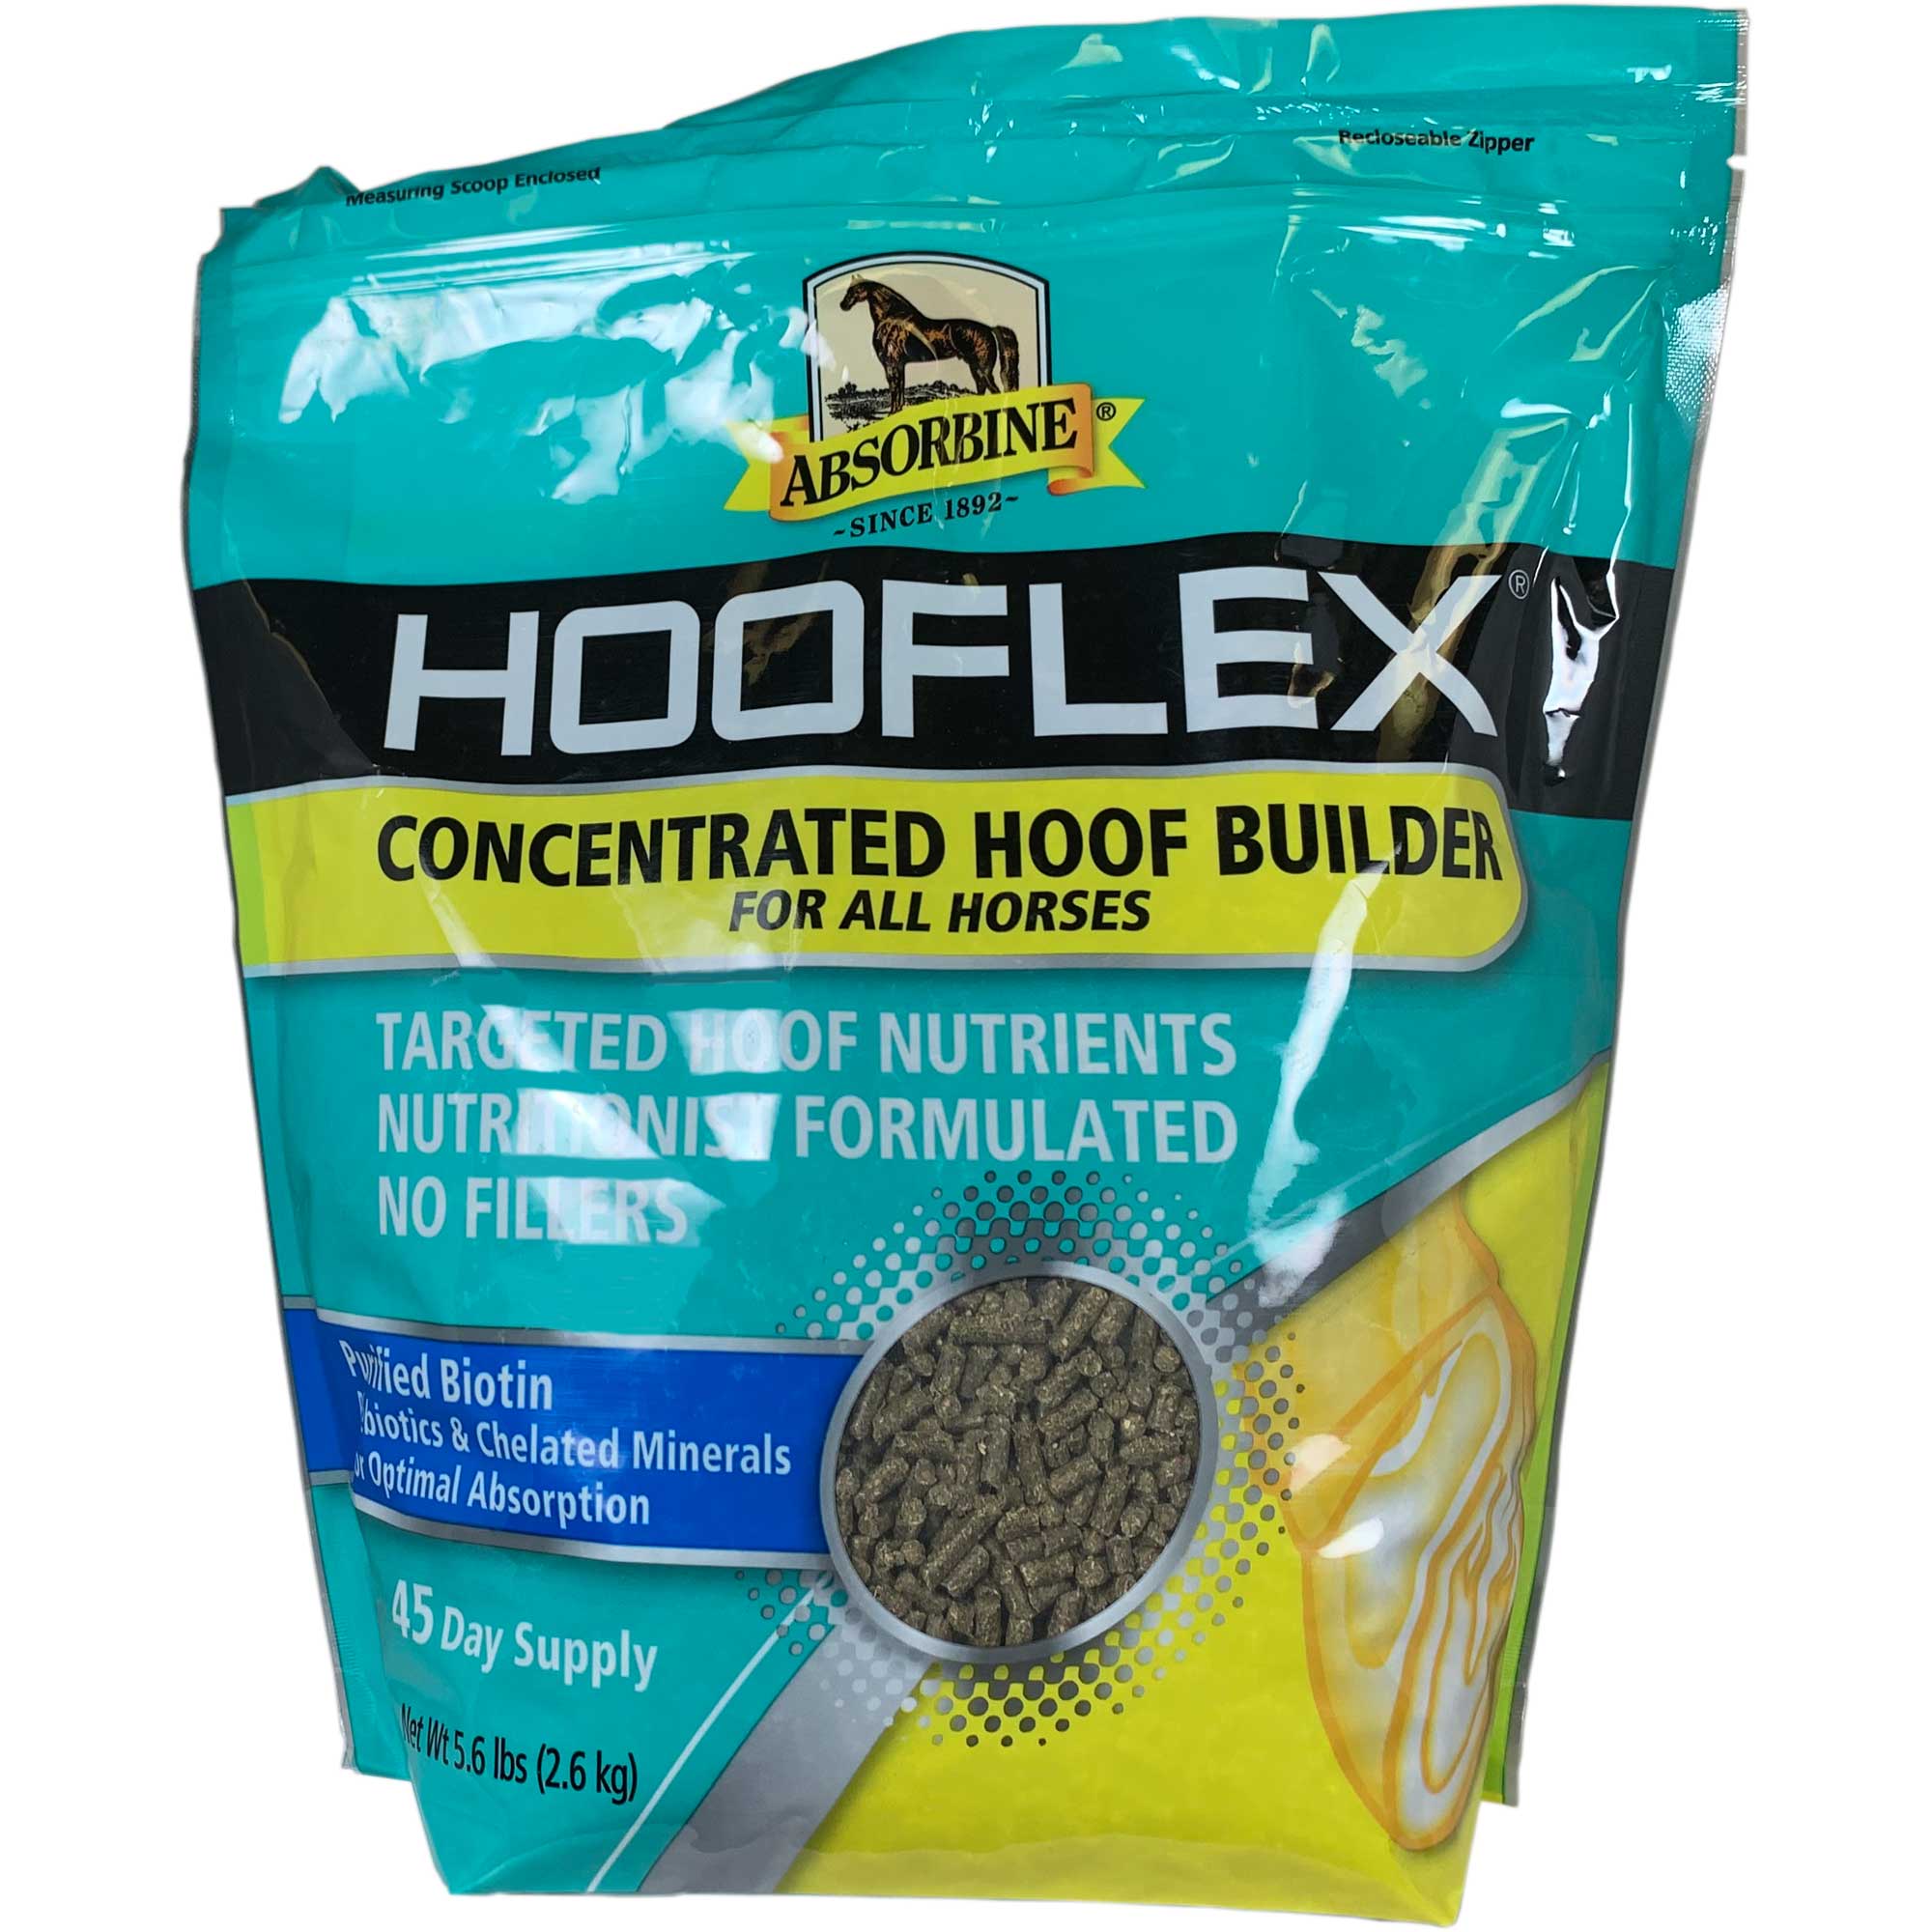 Absorbine Hooflex Concentrated Hoof Builder Usage